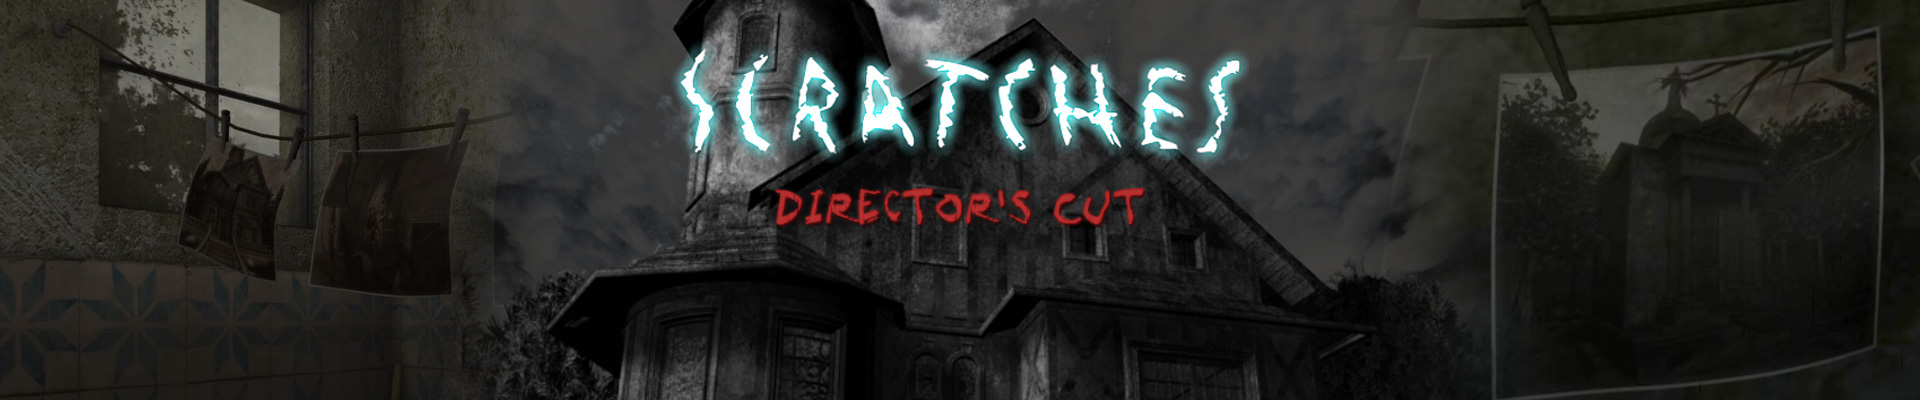 О времена: Scratches: Director’s Cut